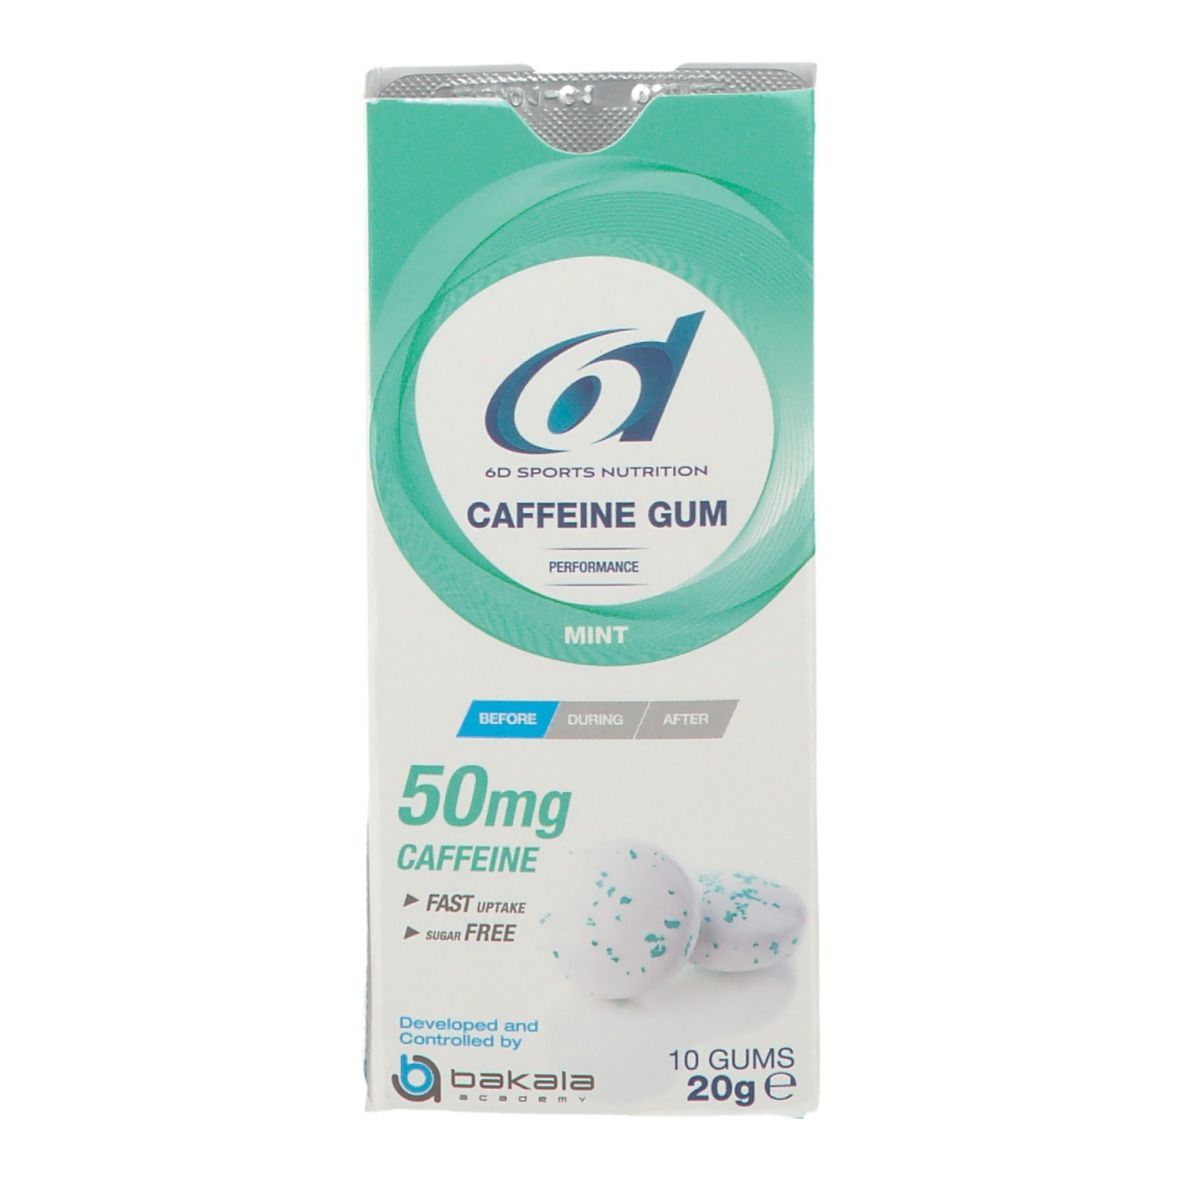 6D Sports Nutrition Caffeine Chewing Gum - 10 gums